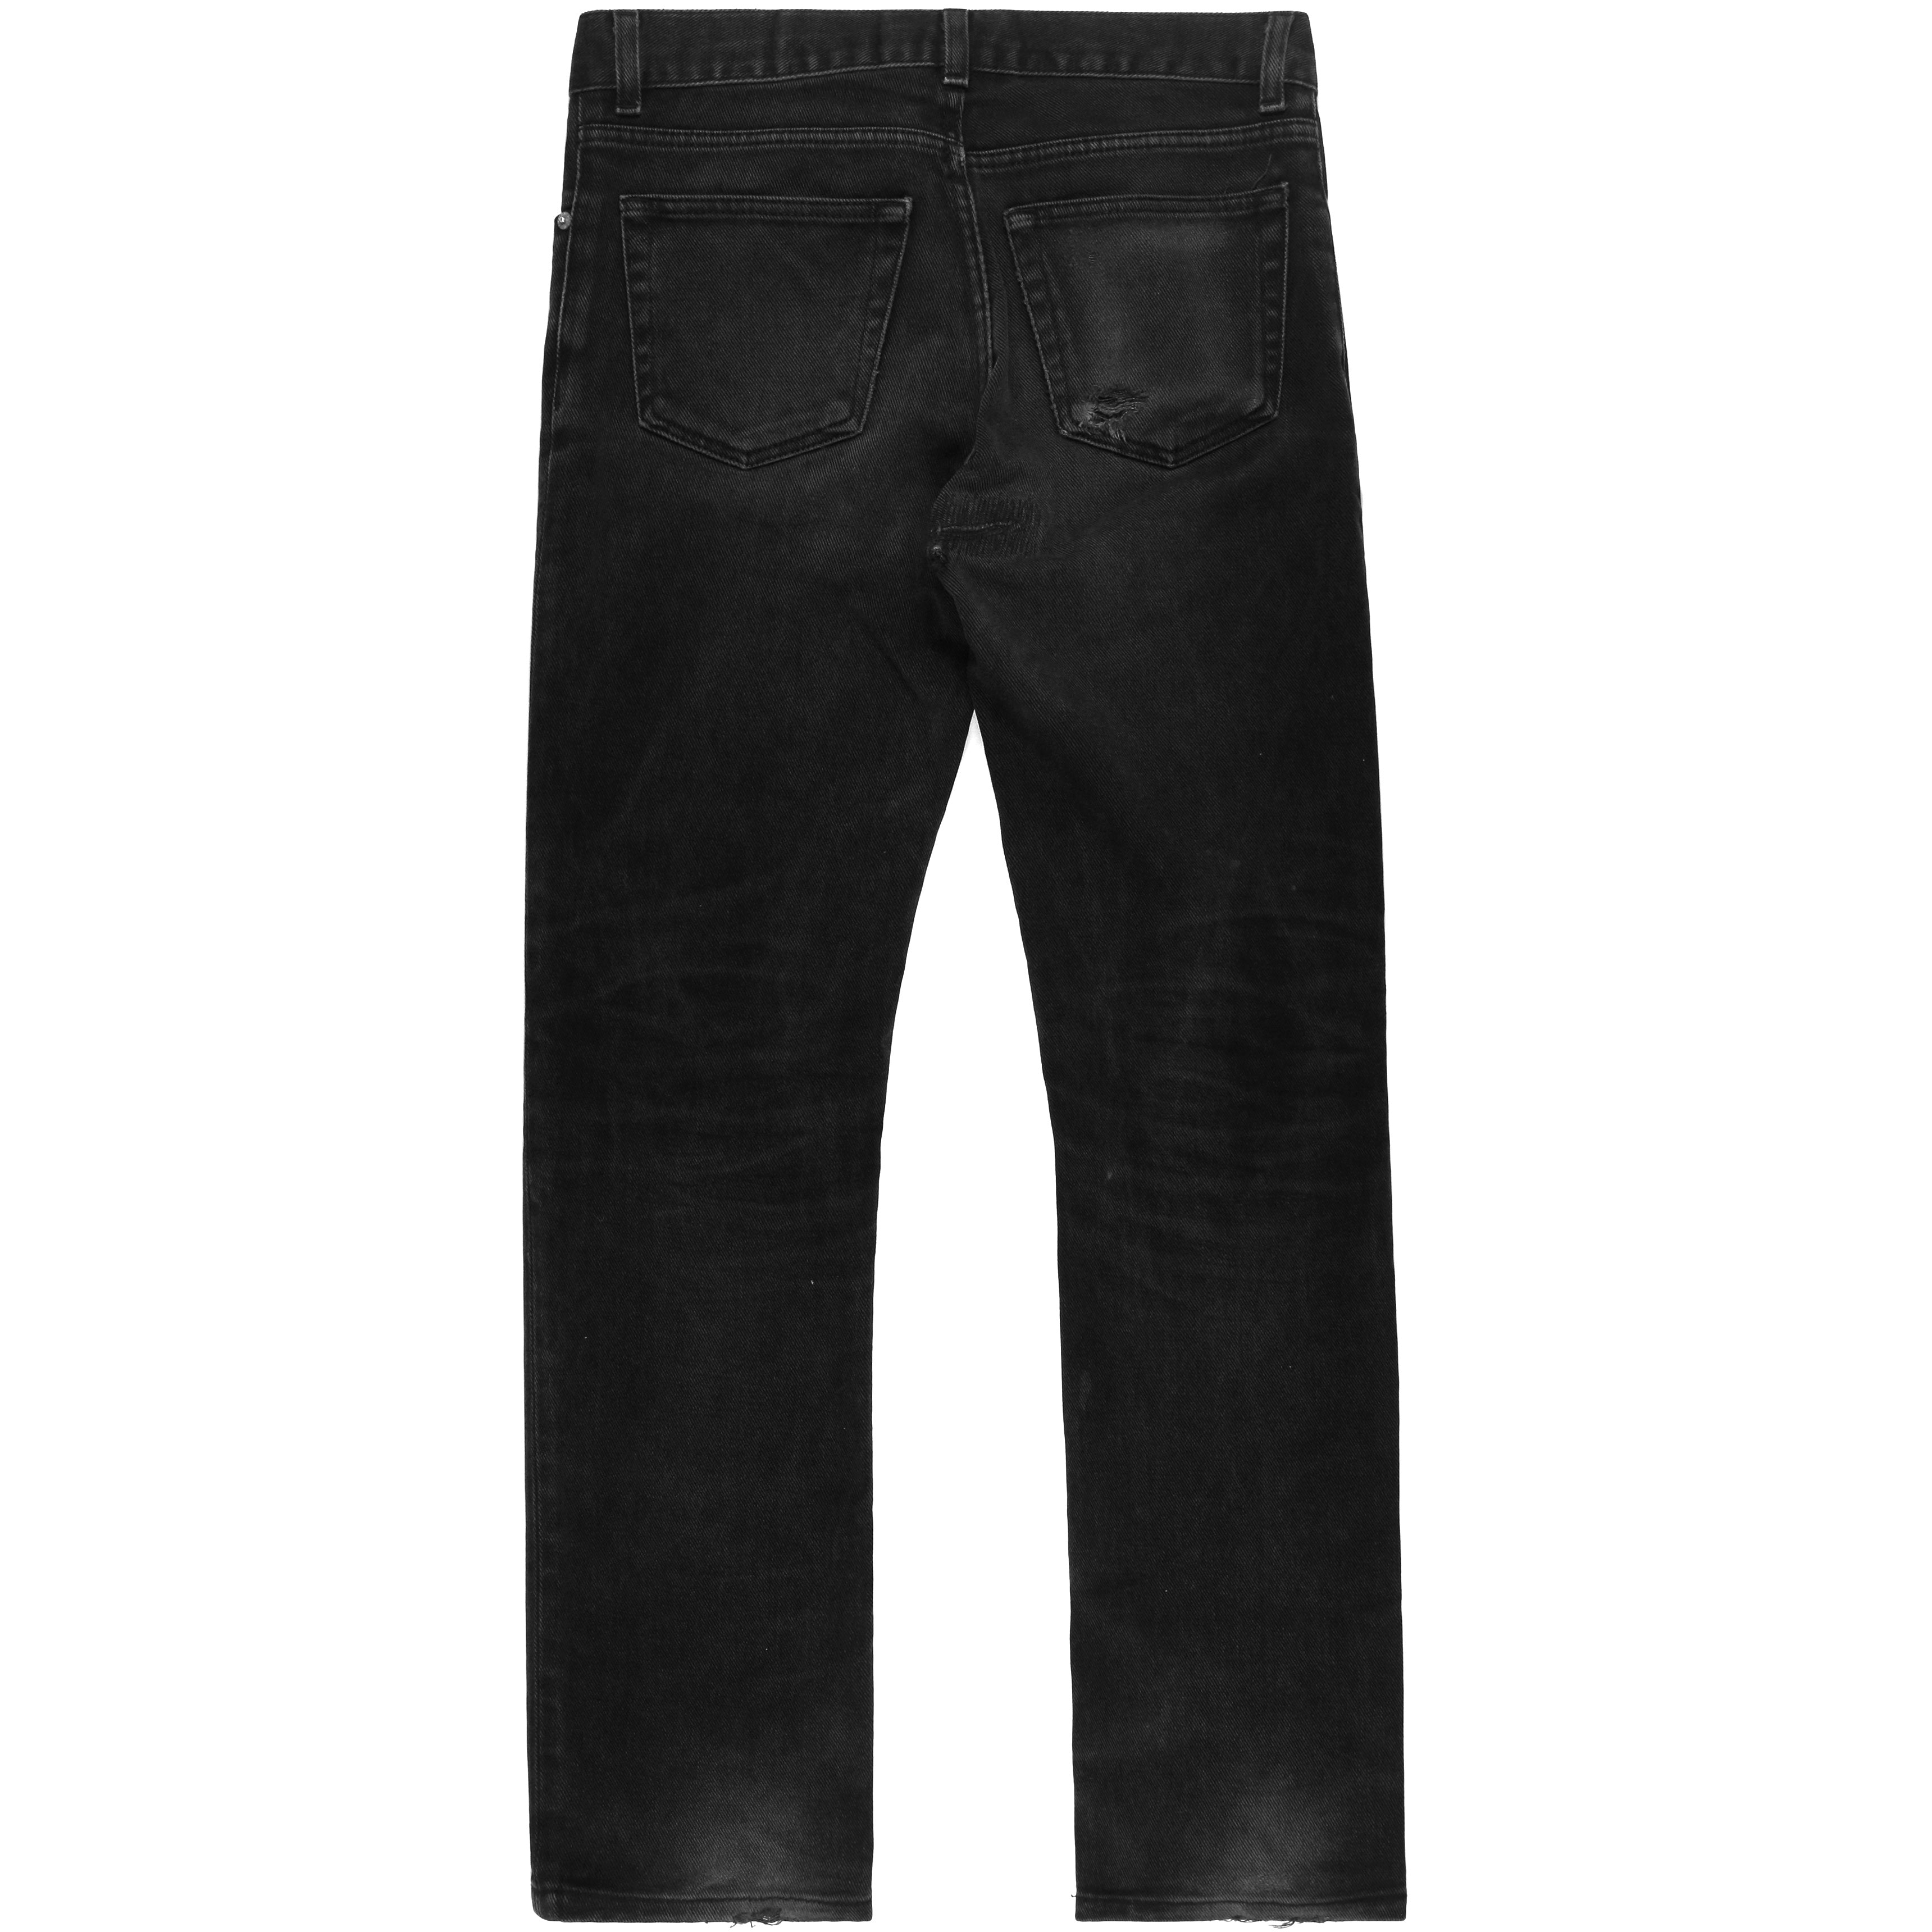 Helmut Lang Black Washed Jeans - 1999 - SILVER LEAGUE